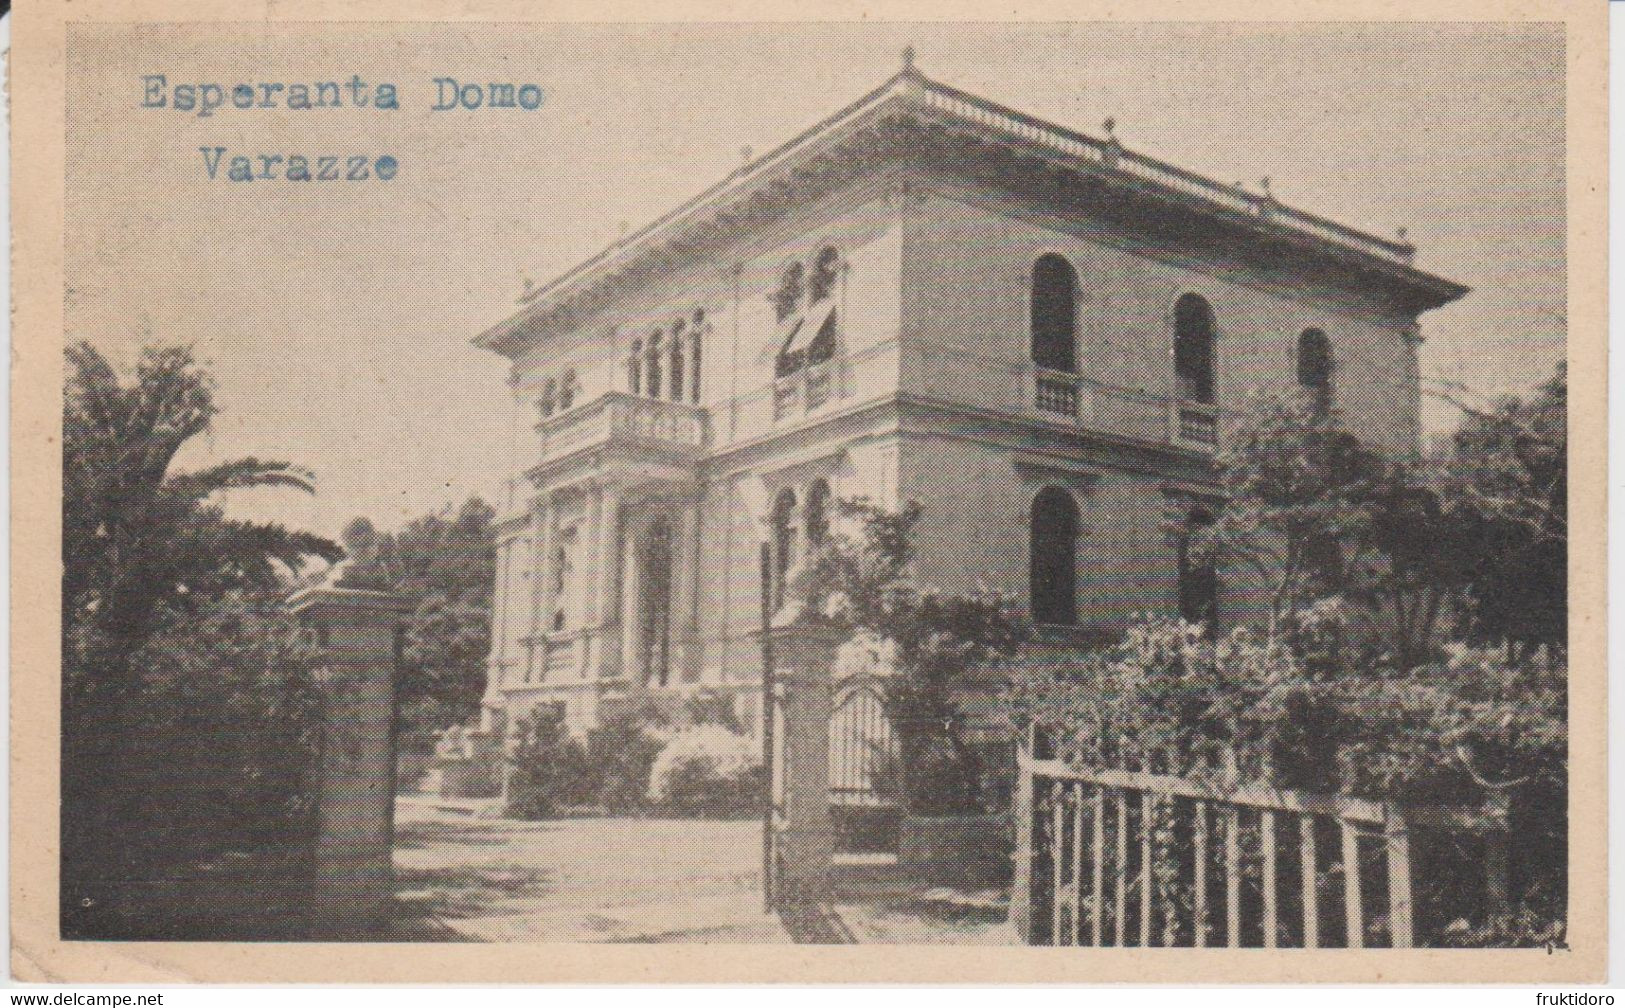 AKEO Card About Esperanto House In Varazze - Italy - Written In Esperanto 1950 - Esperanto